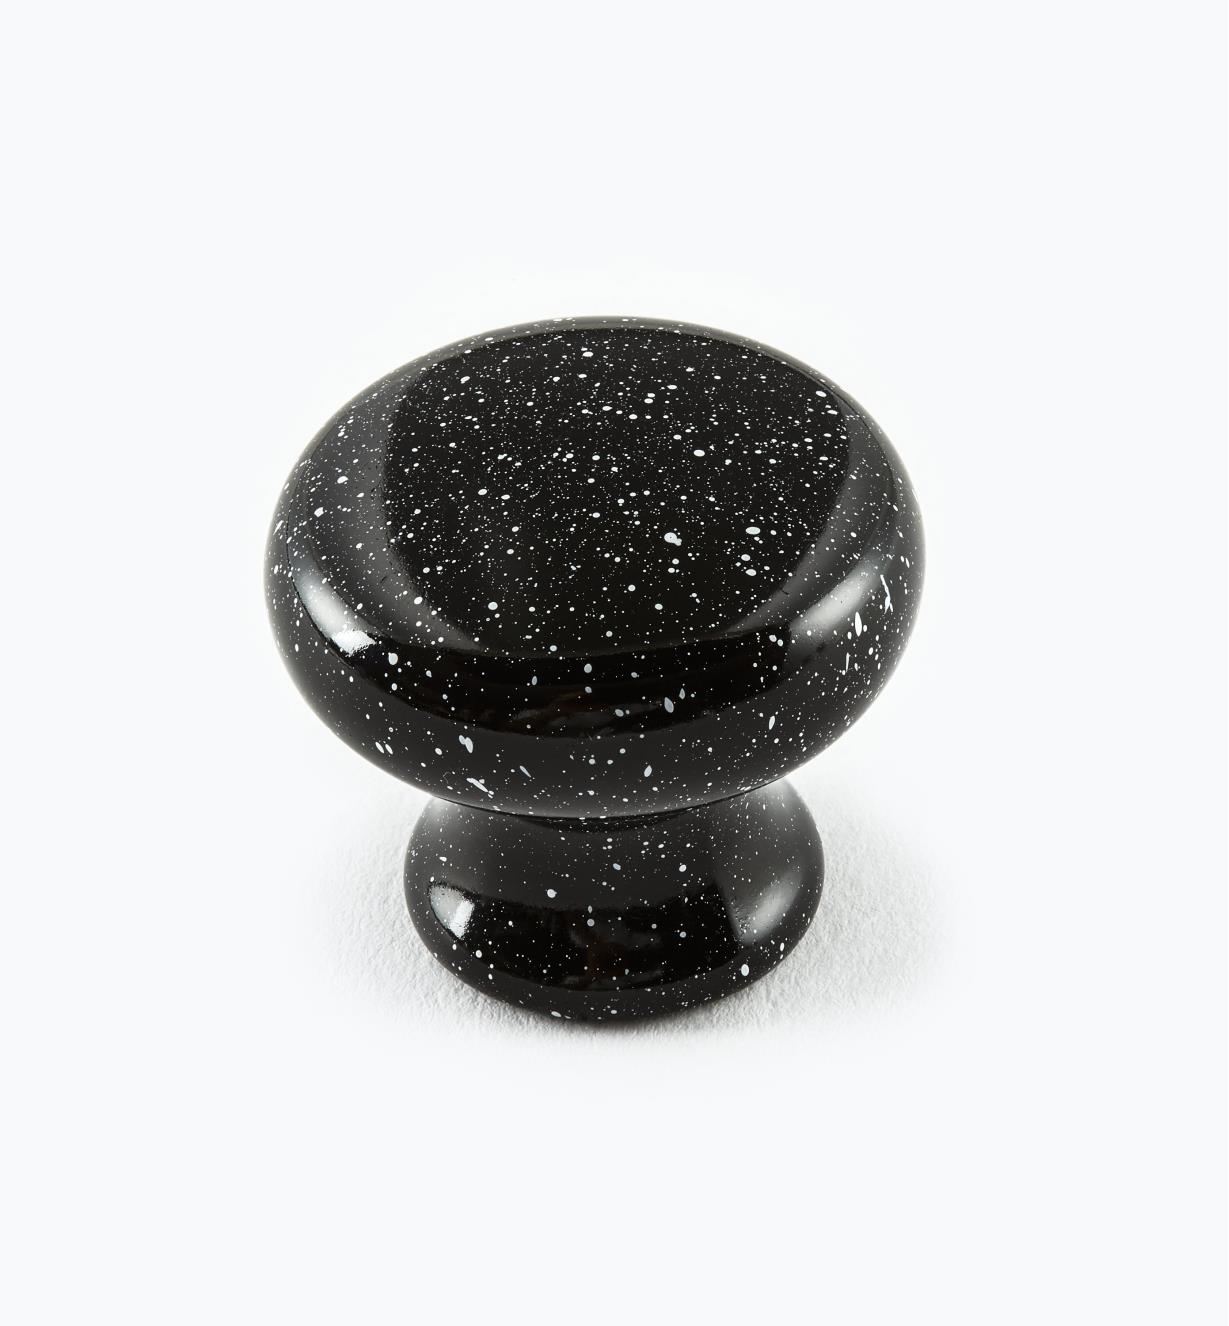 00W3754 - 1 1/4" Sandstone Black Knob